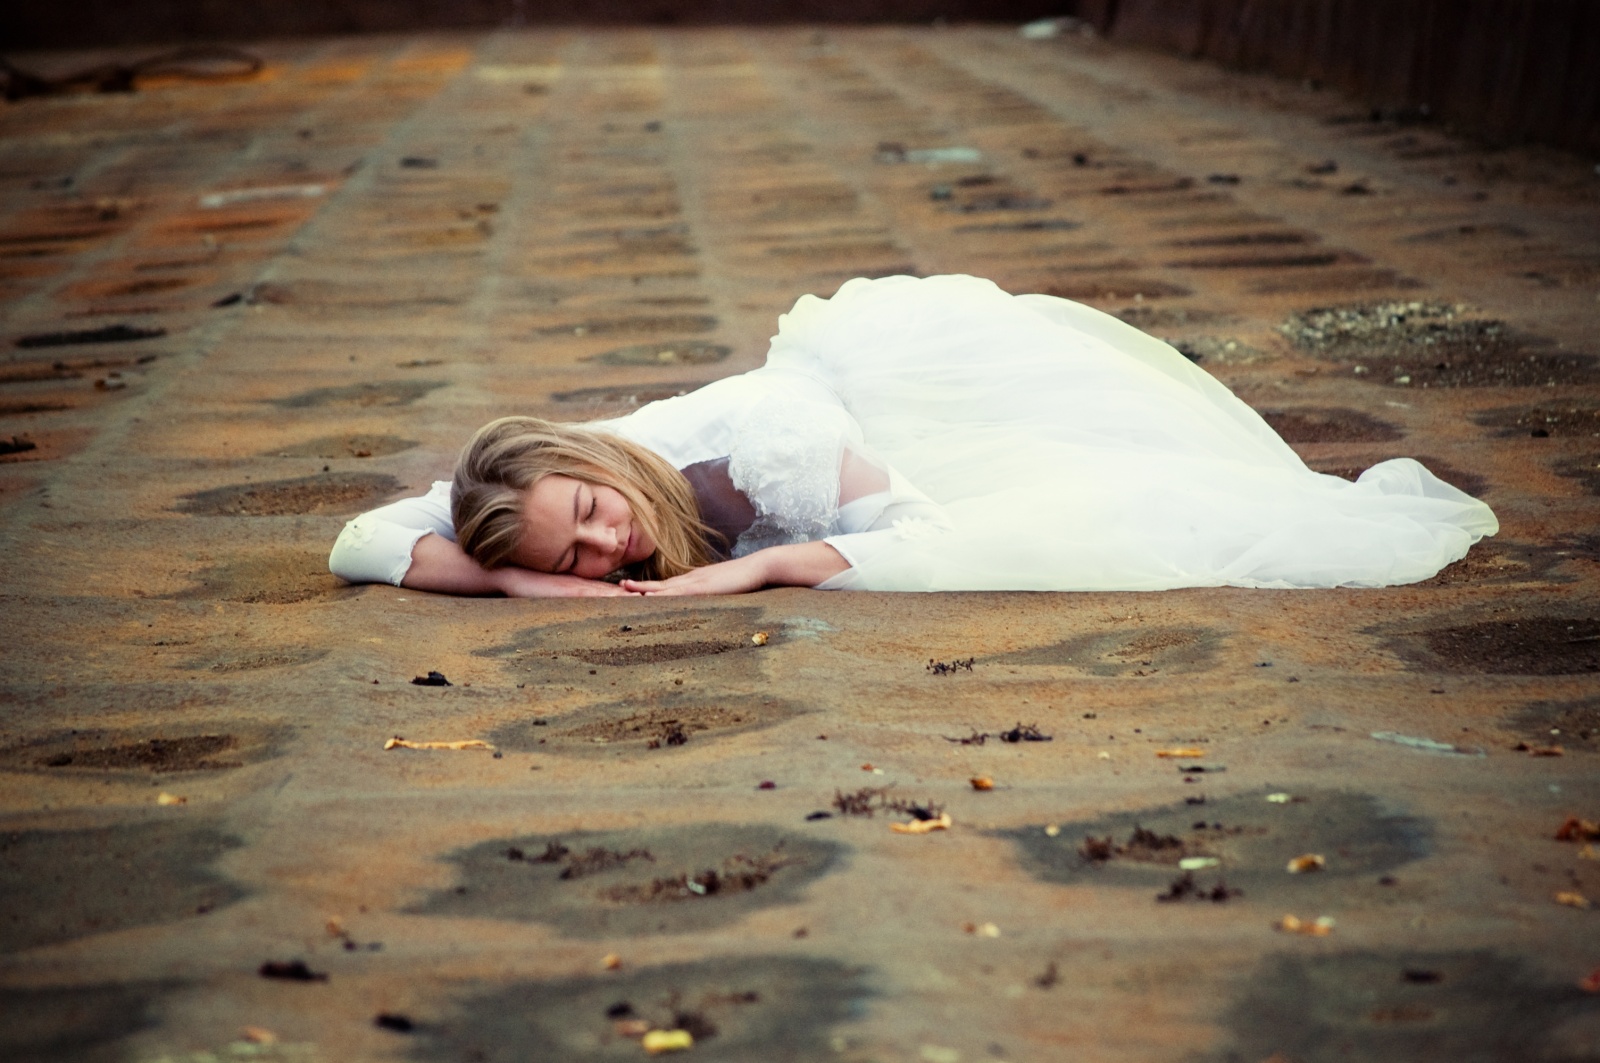 Фотография для критики "Sleep my bride" | Фотограф Матвей Коршунов | foto.by фото.бай